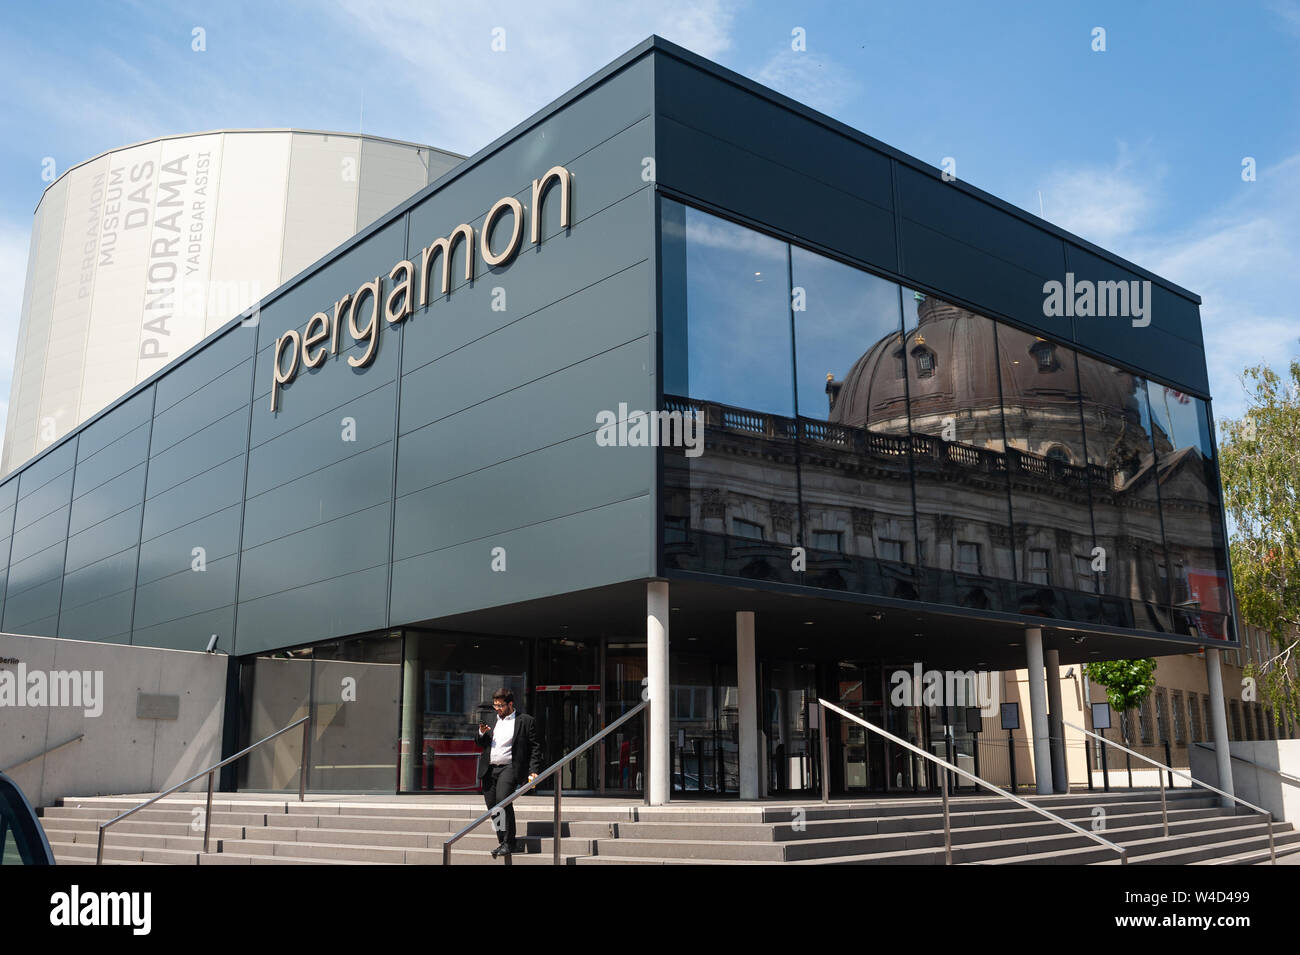 25.06.2019, Berlin, Deutschland, Europa - Pergamonmuseum 'Panorama' am Kupfergraben in Berlin Mitte. Stockfoto